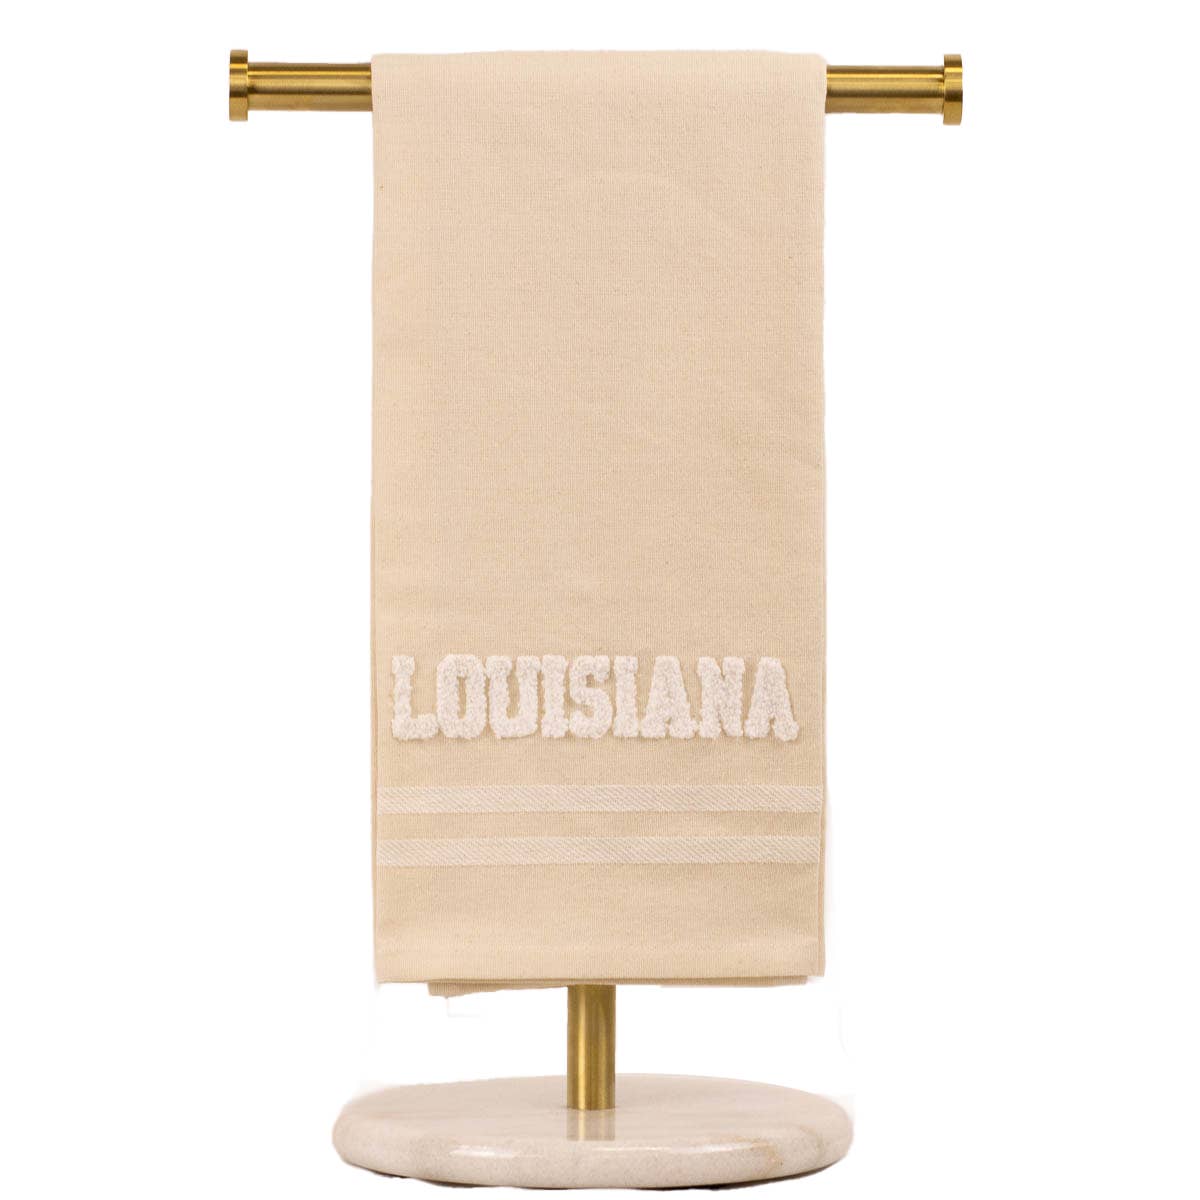 Louisiana Embroidery Hand Towel   Oat/Soft White   20x28